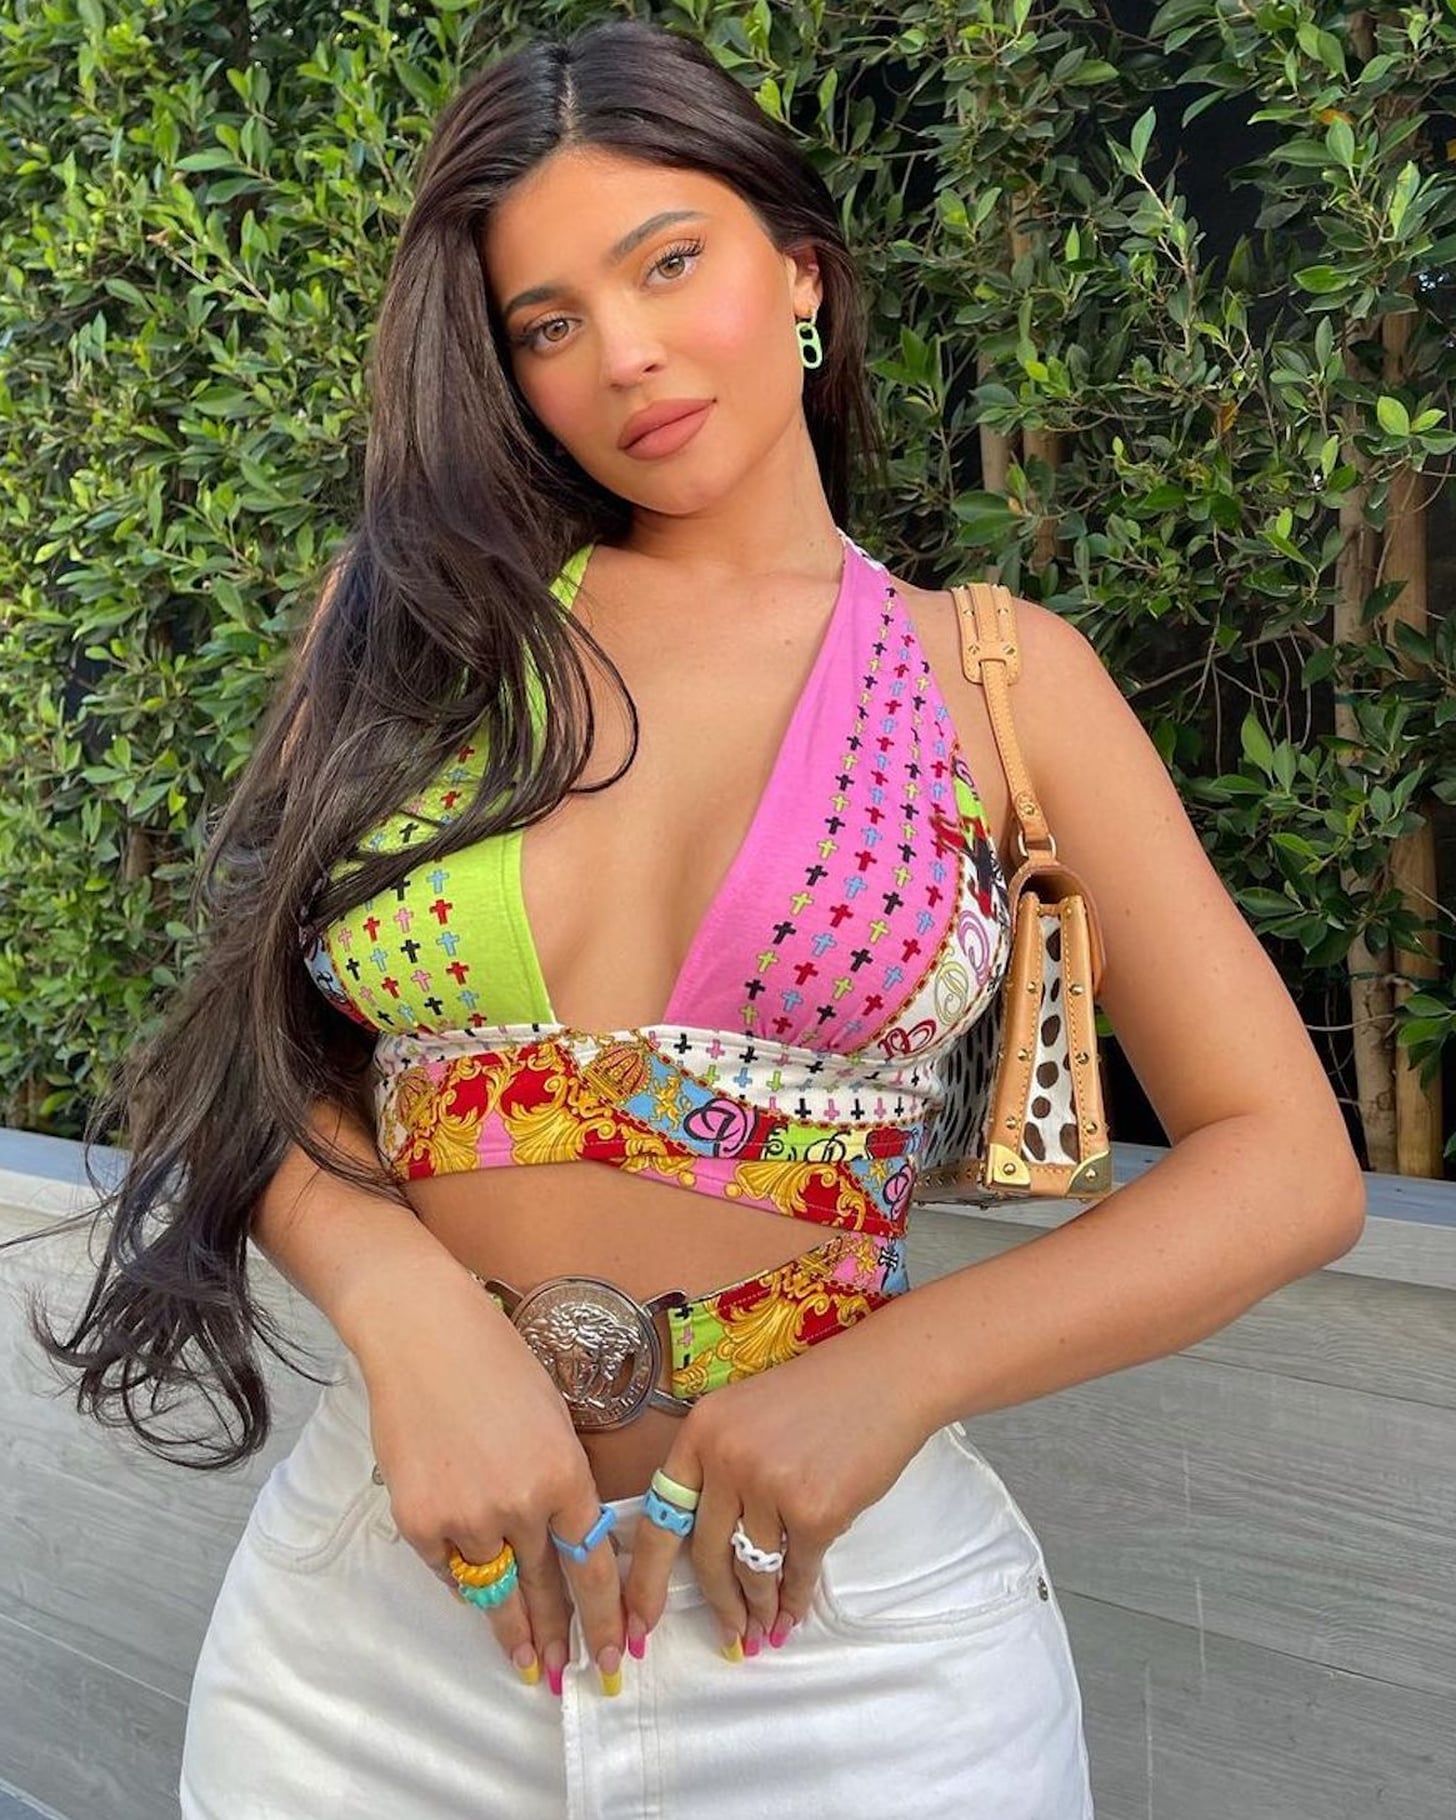 Kylie Jenner's 2-Toned Vintage Versace Top on Instagram